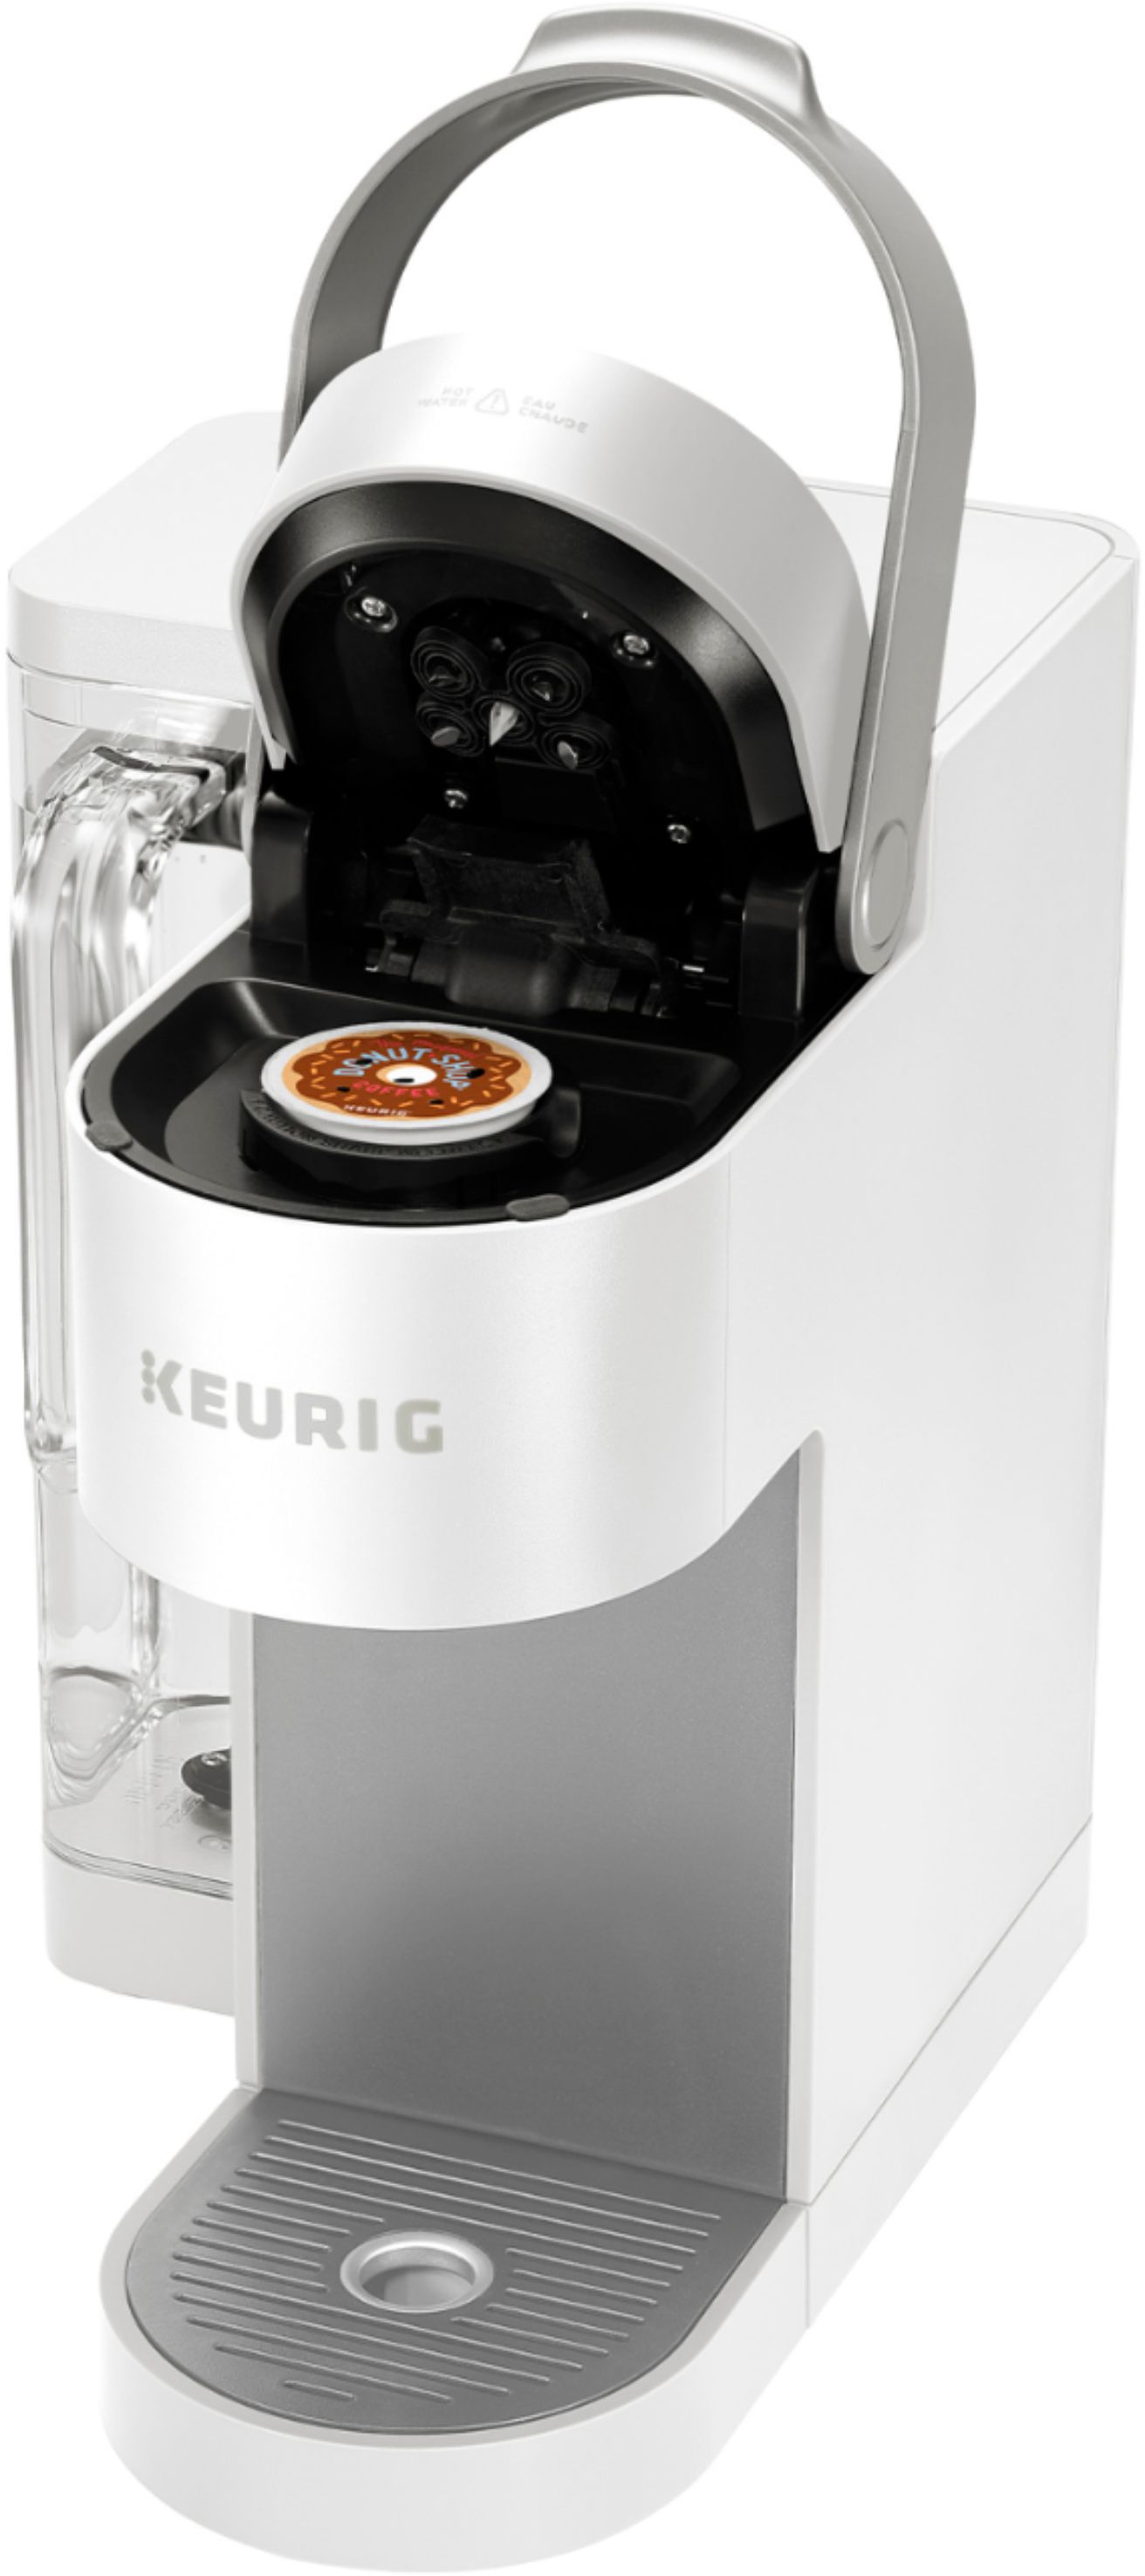 Keurig K-supreme Single-serve K-cup Pod Coffee Maker - White : Target